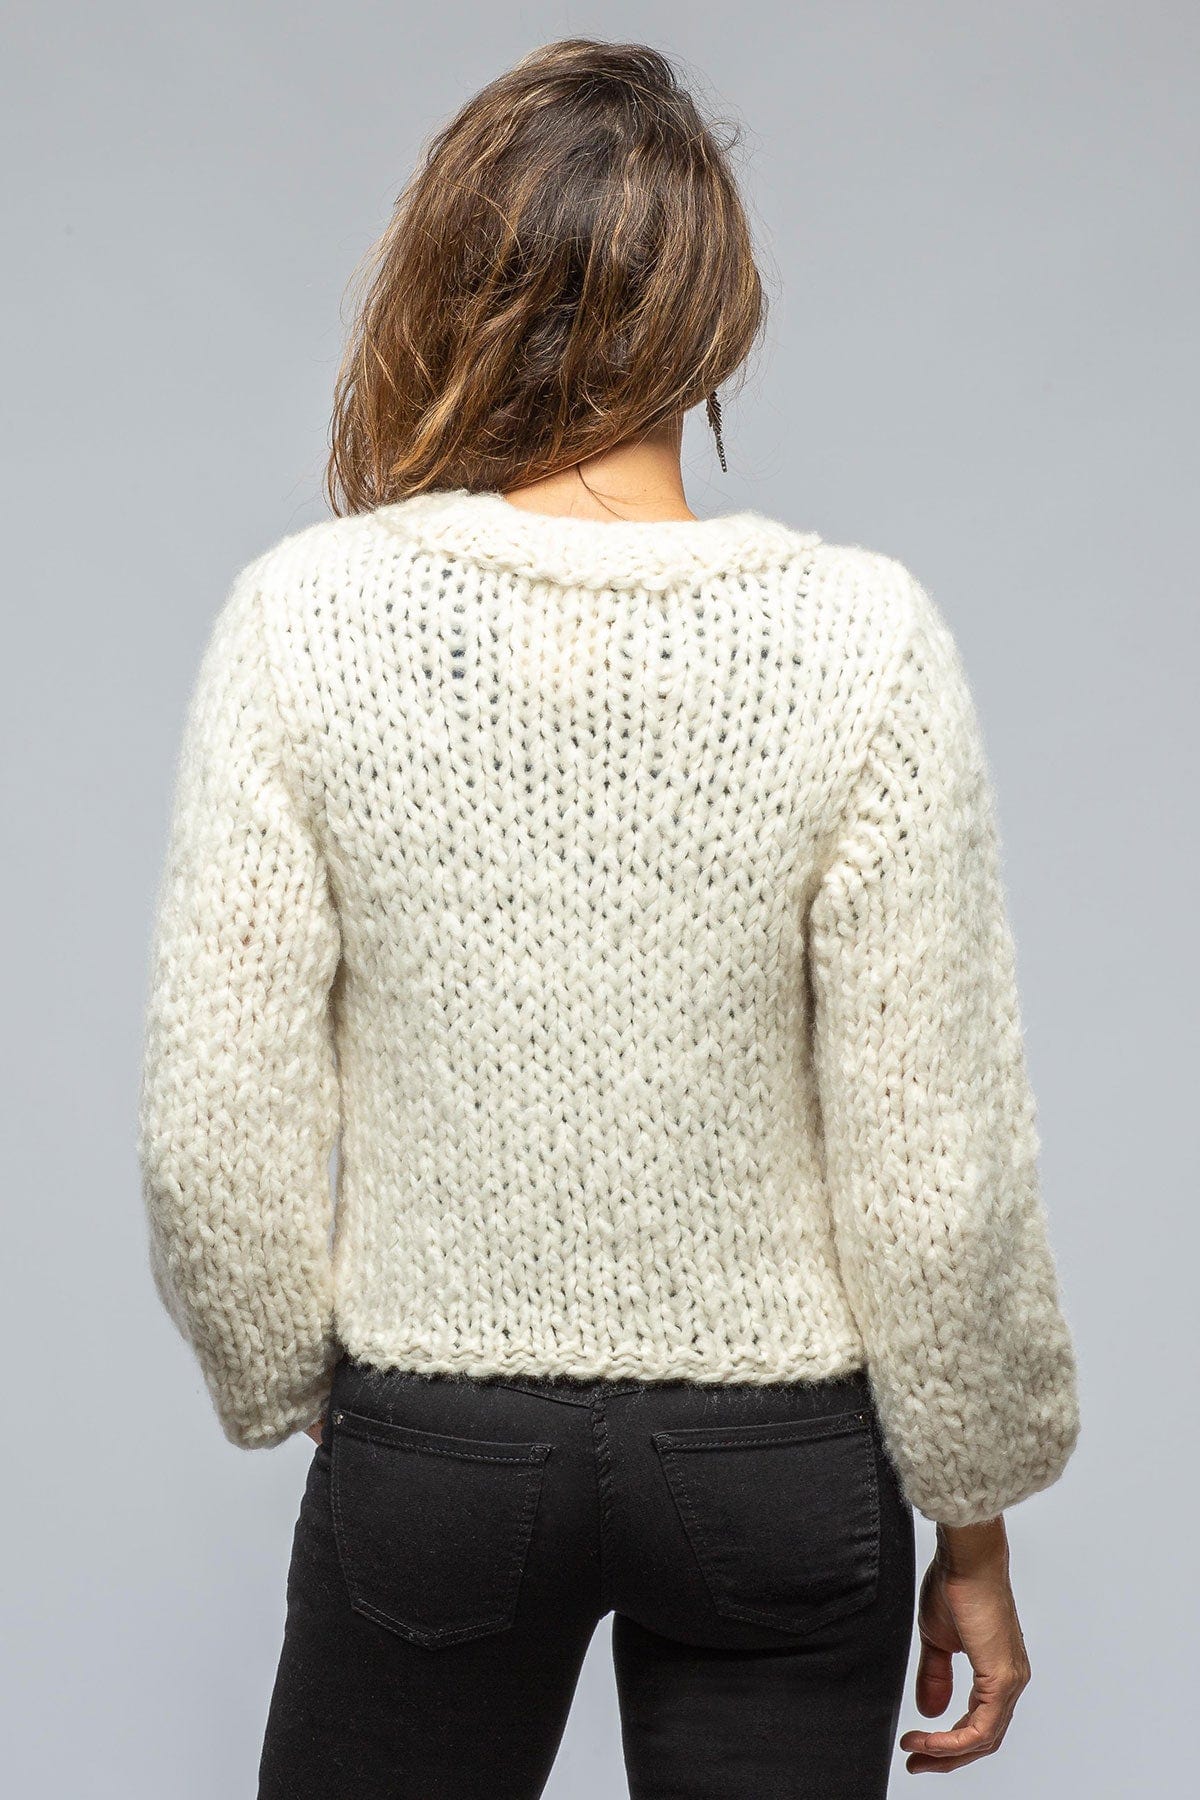 Beatrix Lux Cashmere Sweater In Cream - AXEL'S